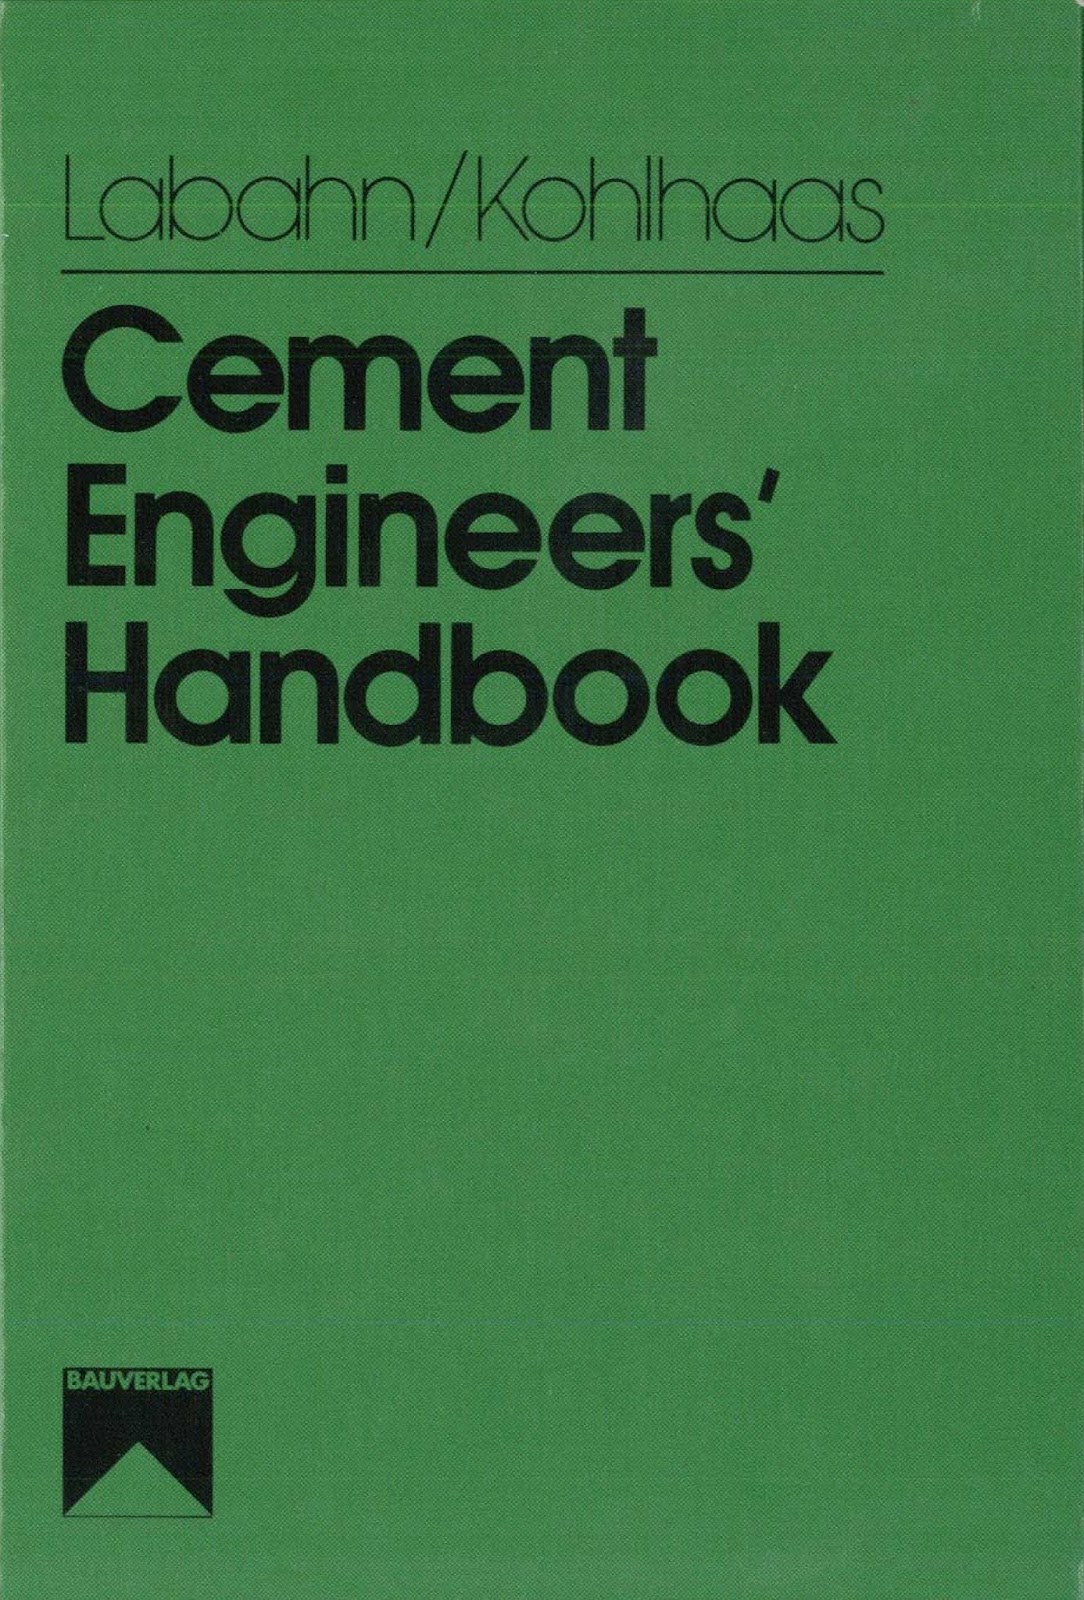 Engineering Library Ebooks: Cement Engineers Handbook, 4th Edition